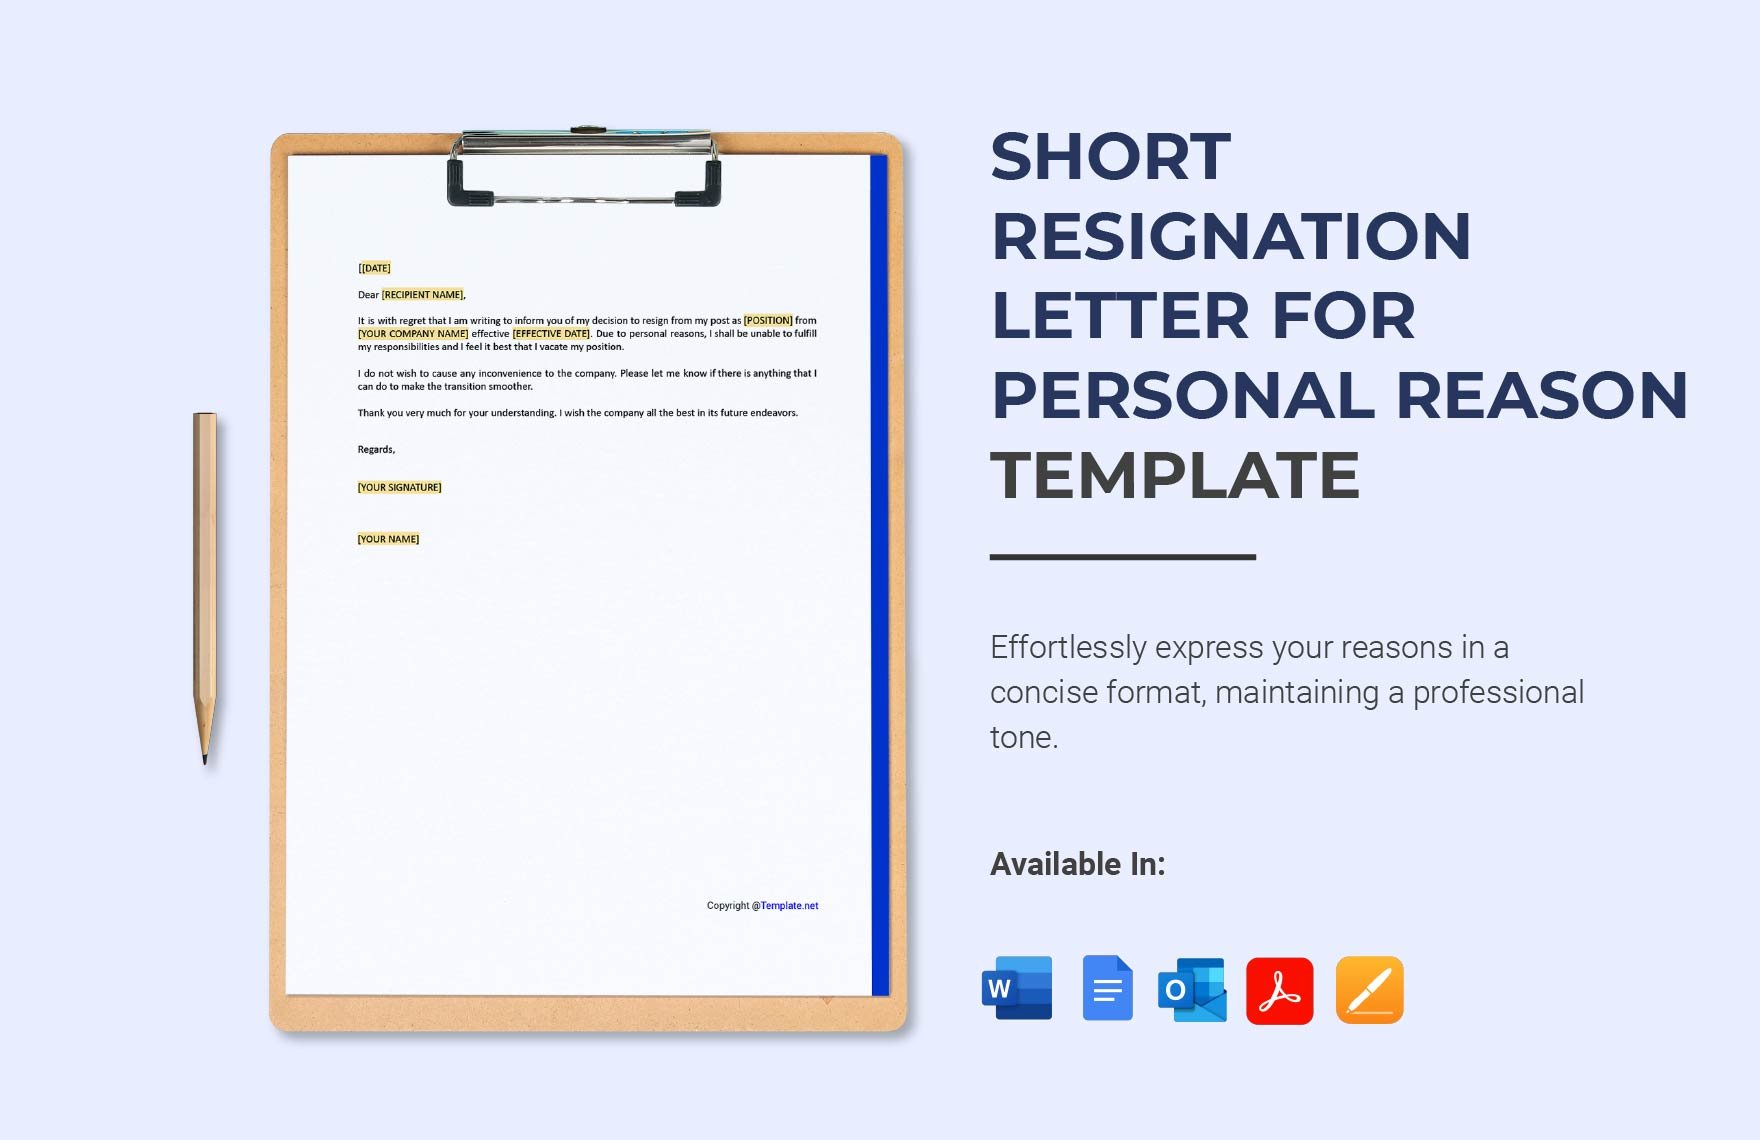 Short Resignation Letter for Personal Reason